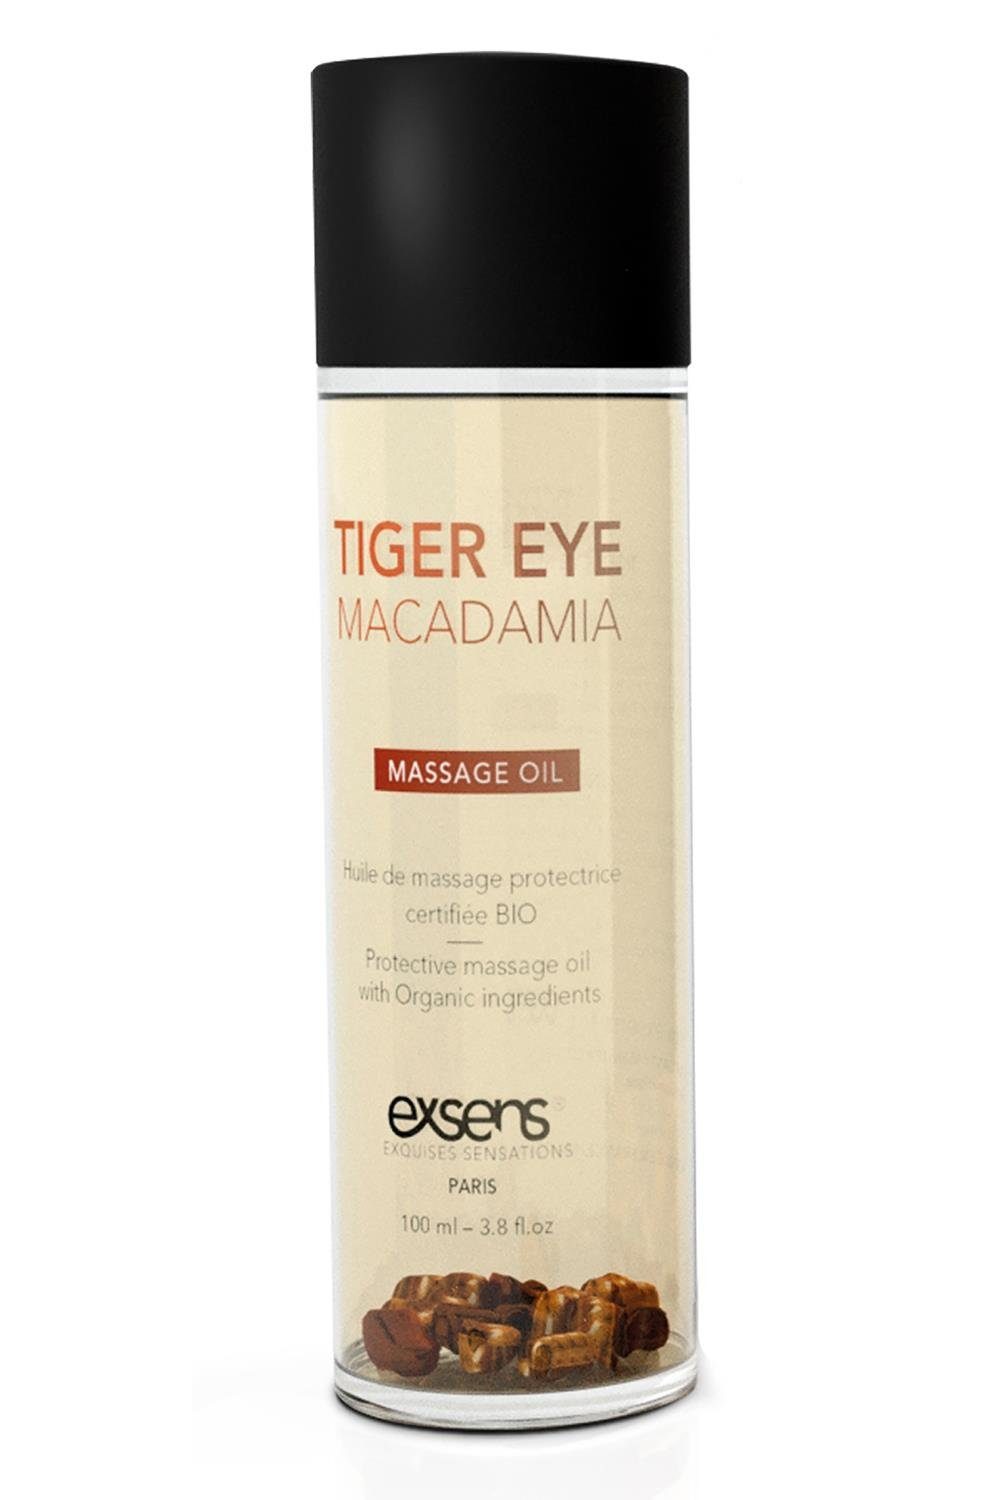 Exsens Gleit- & Massageöl Exsens Eye 100ml, Macadamia Haut der auf leicht Massage Fließt Tiger Organic Oil